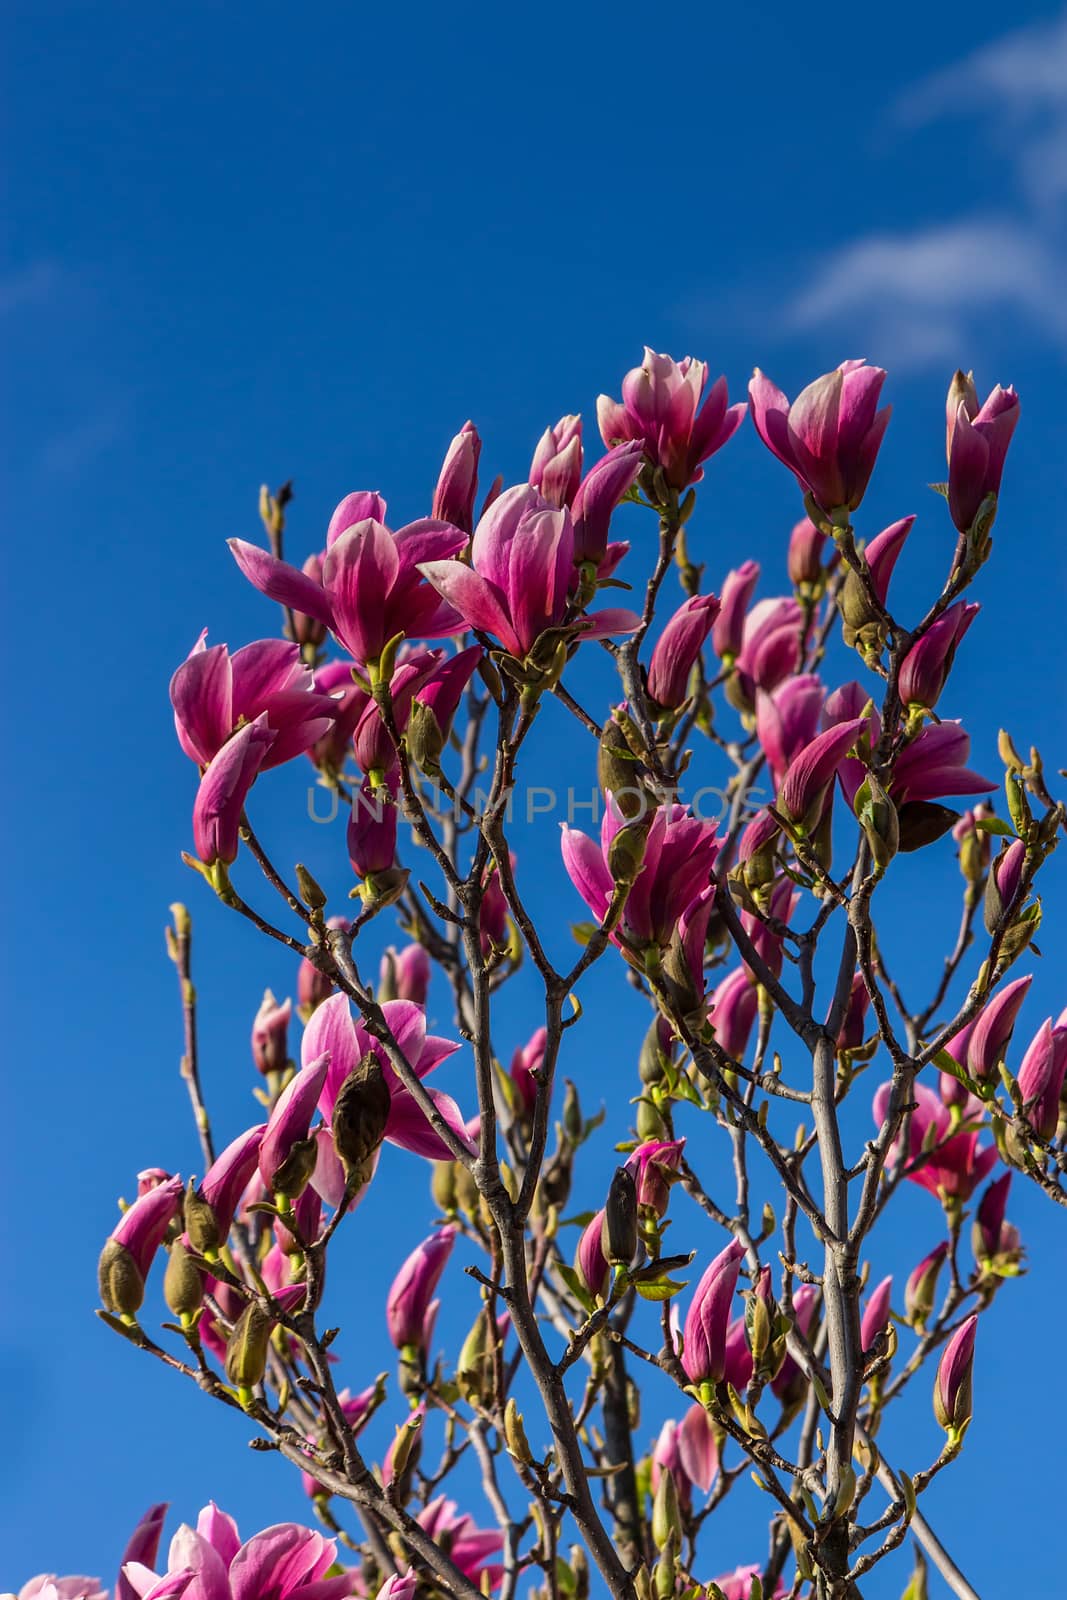 magnolia flowers on a blury background by Pellinni